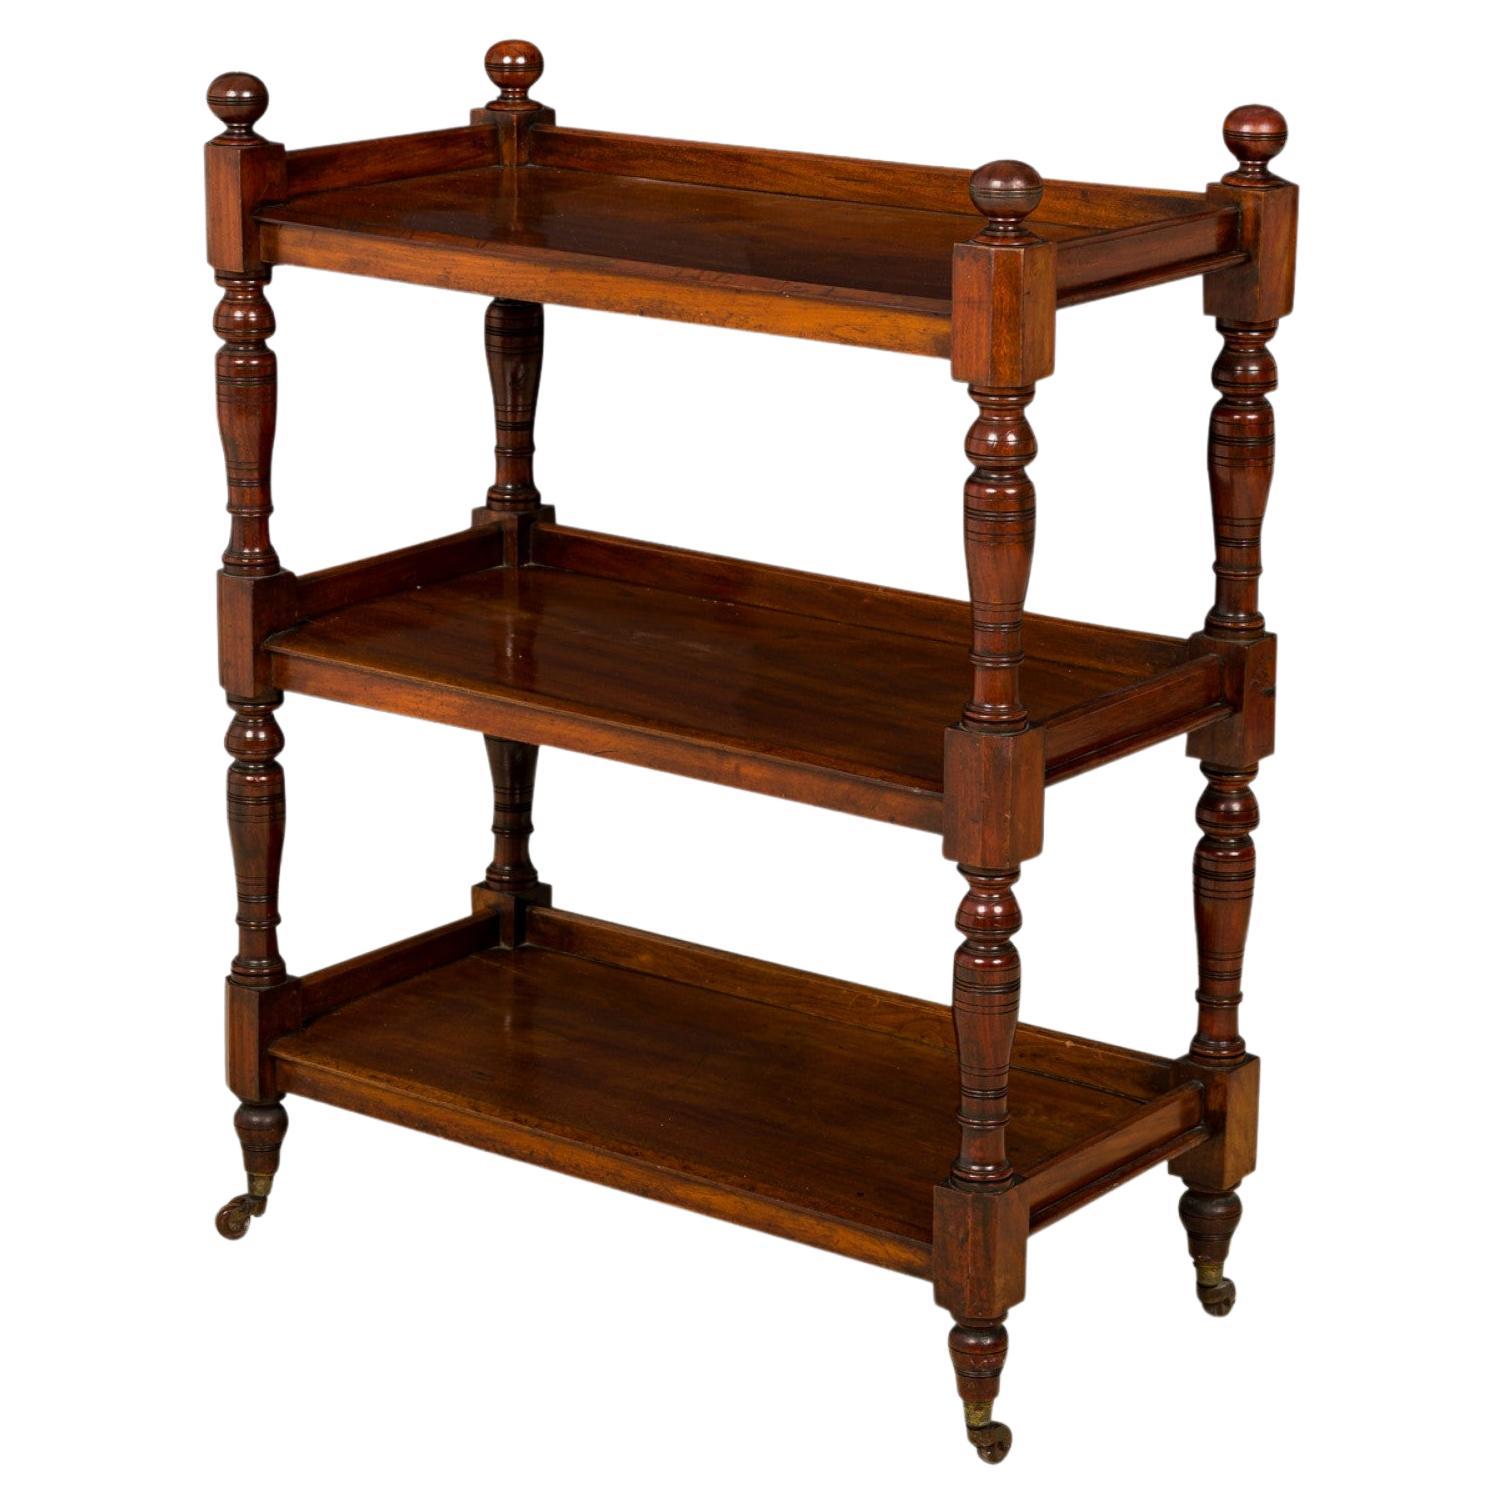 English Victorian Turned Leg Three Shelf Small Wooden Etagere / Display Shelf